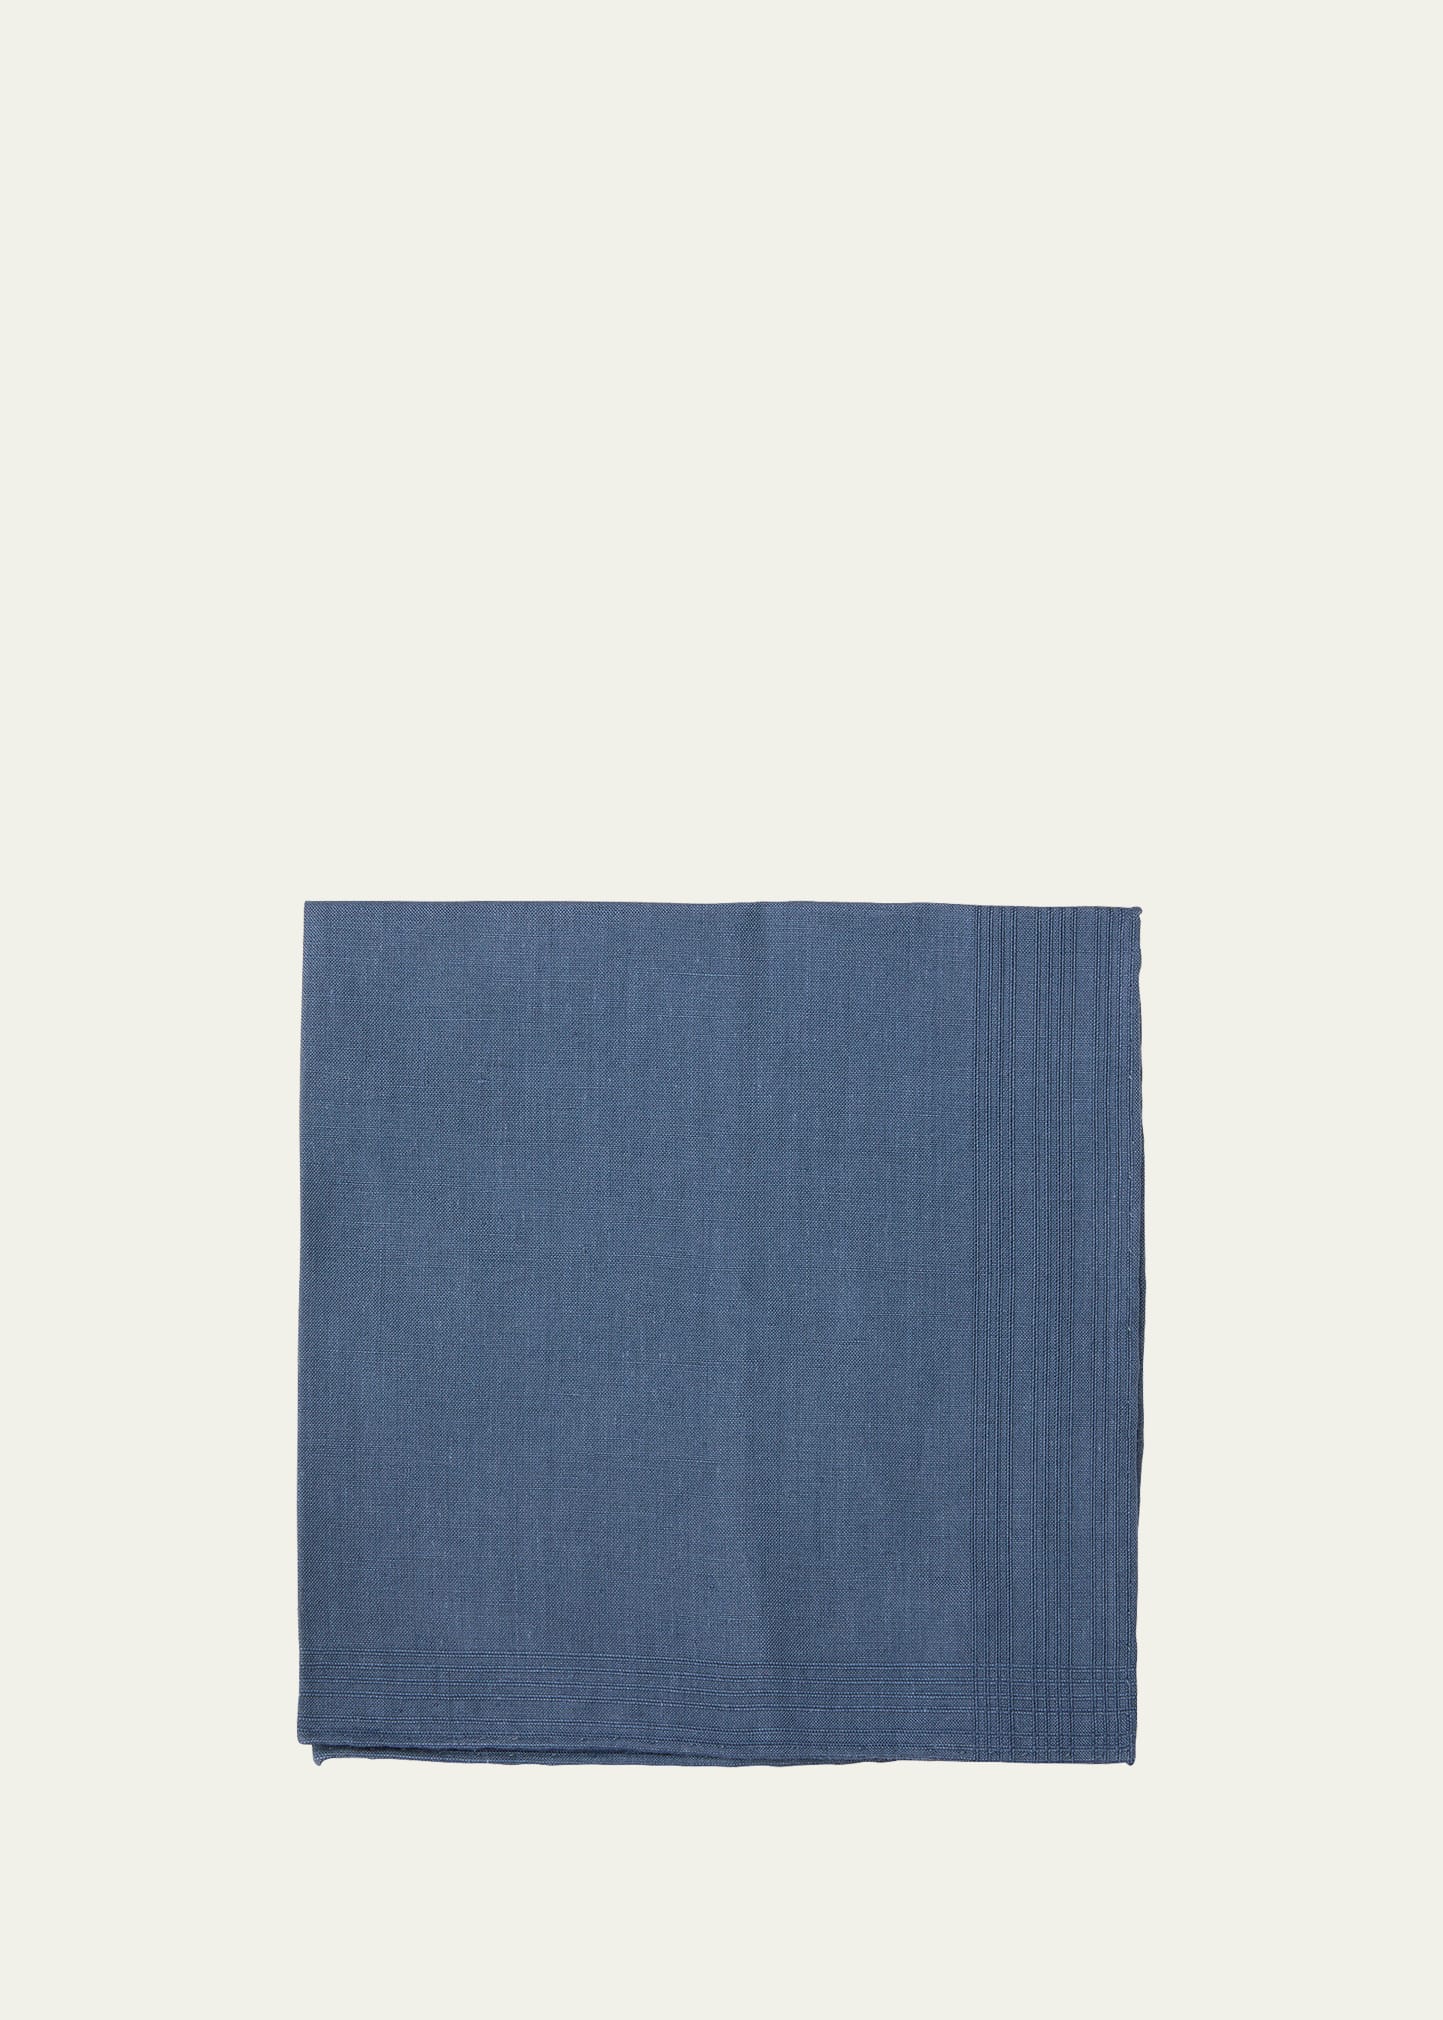 Simonnot Godard Men's Tonal Stripe Handkerchief In Dk Blue